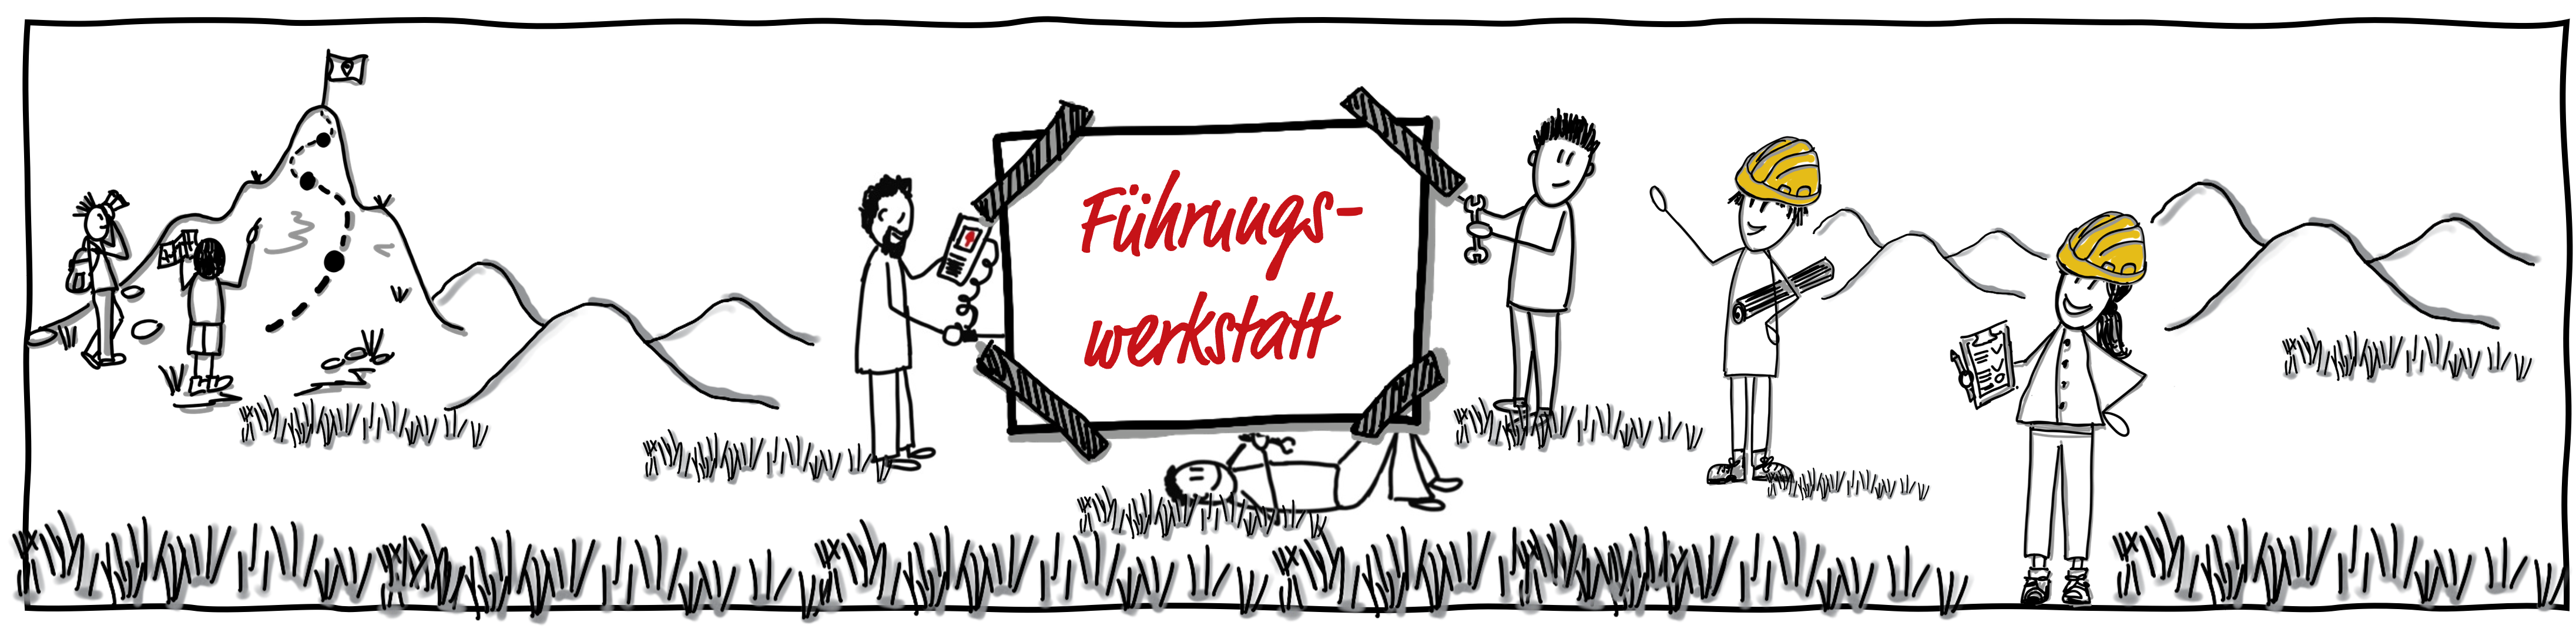 Führunswerkstatt_fact_consulting